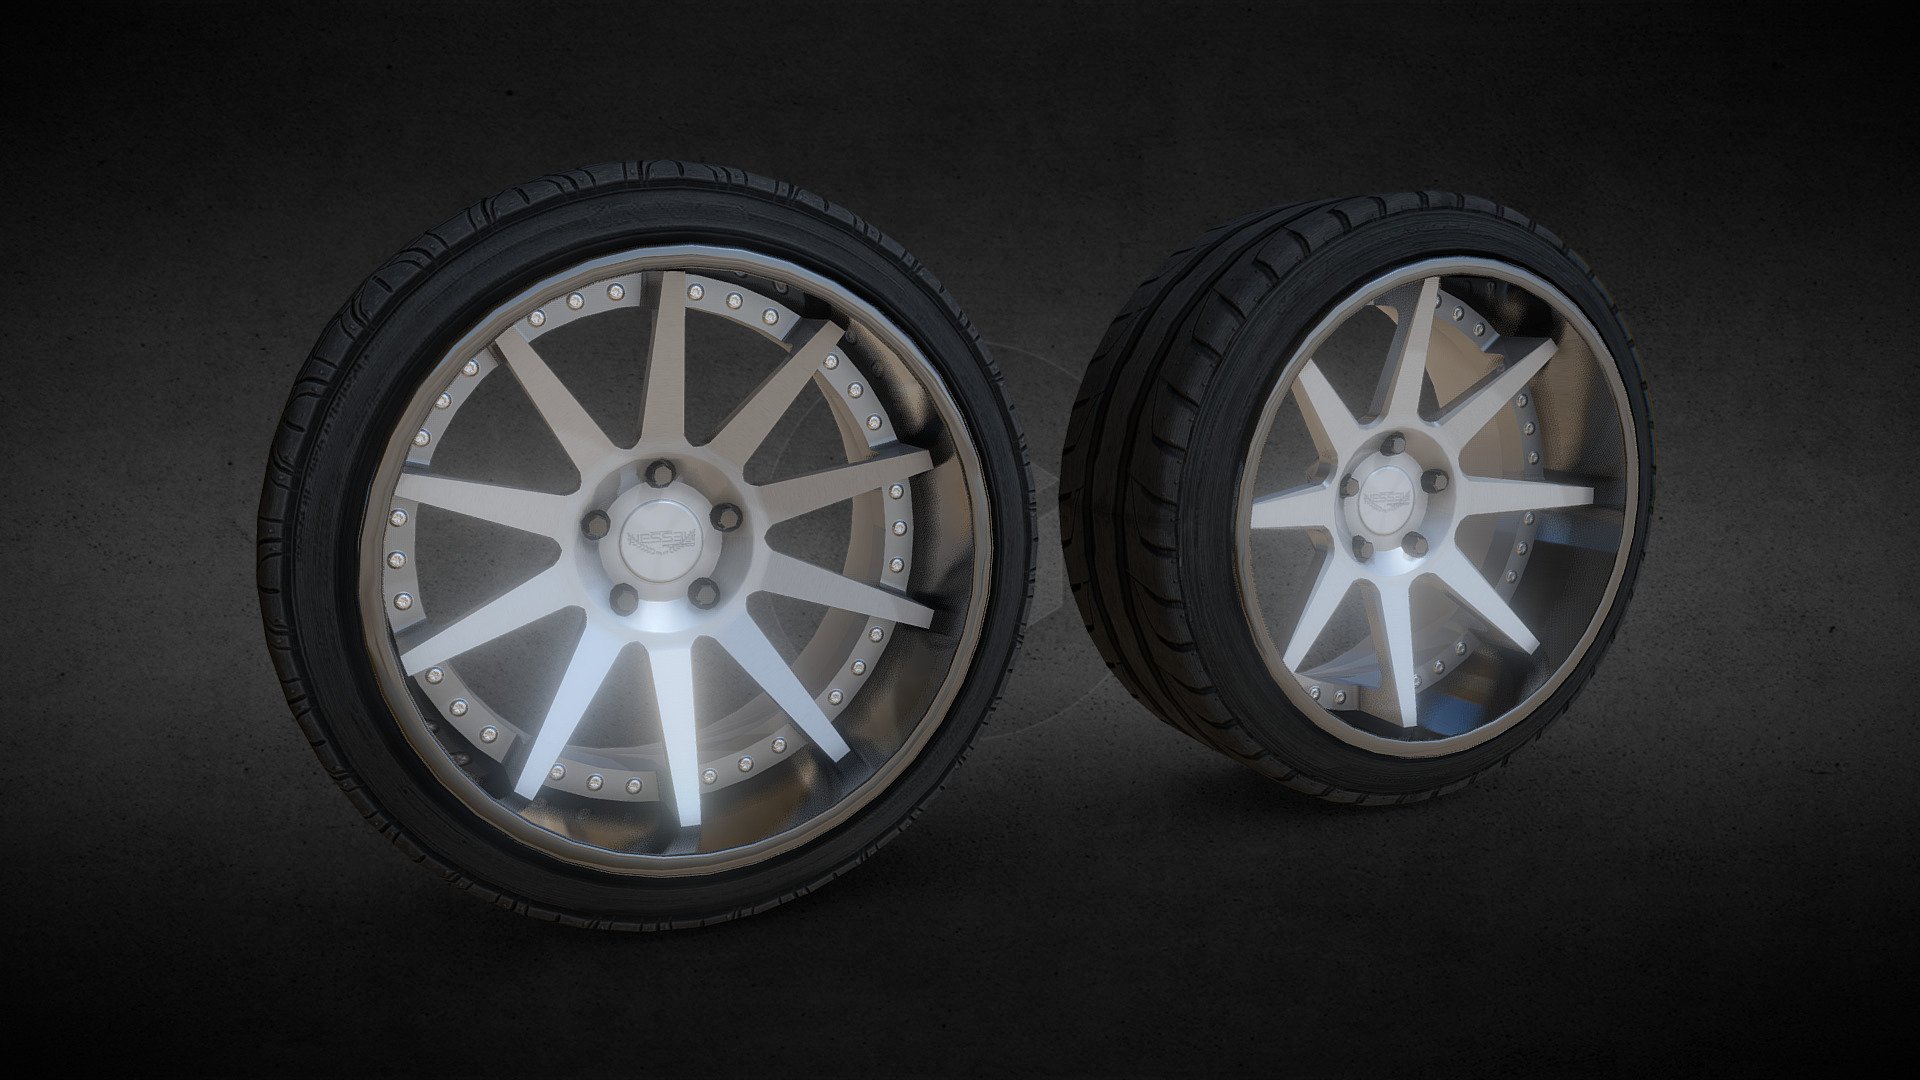 Wheels from Mad Mike's MadBul drift car. Built for an Assetto Corsa mod 3d model